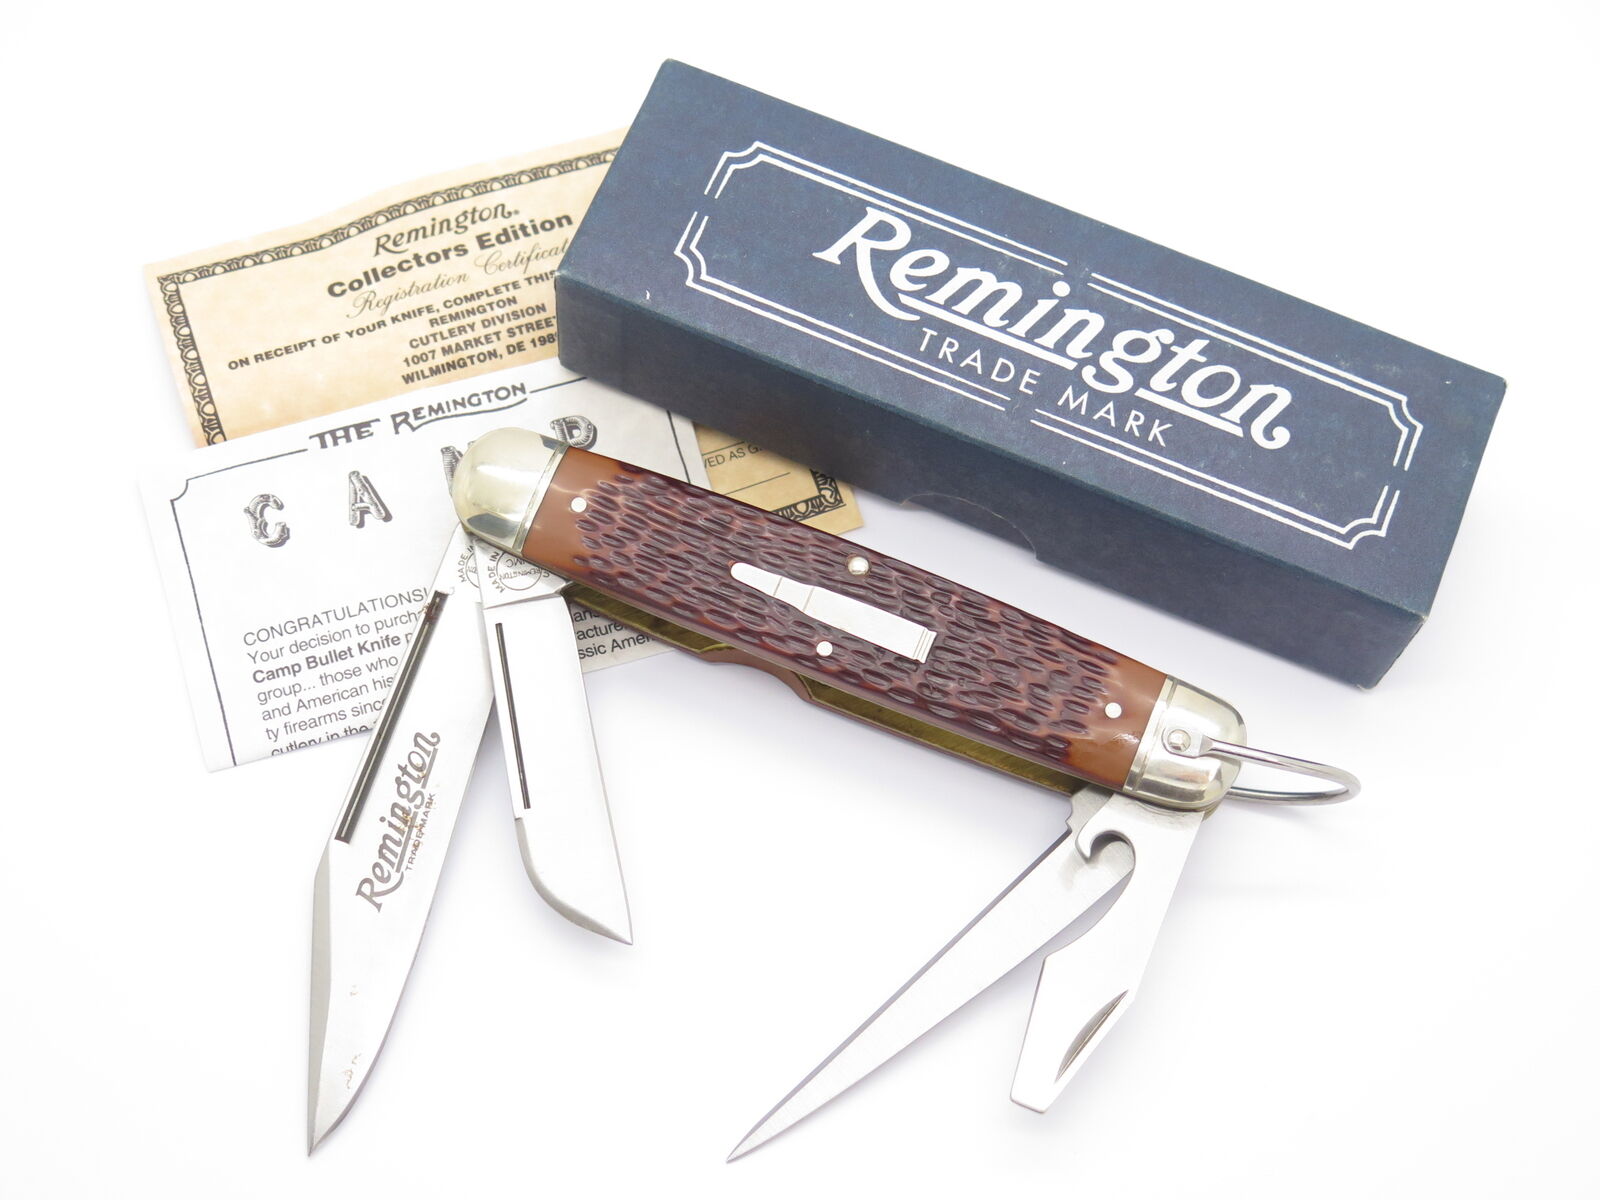 1994 Remington R4243 Camp Bullet USA Delrin Scout Folding Pocket Knife